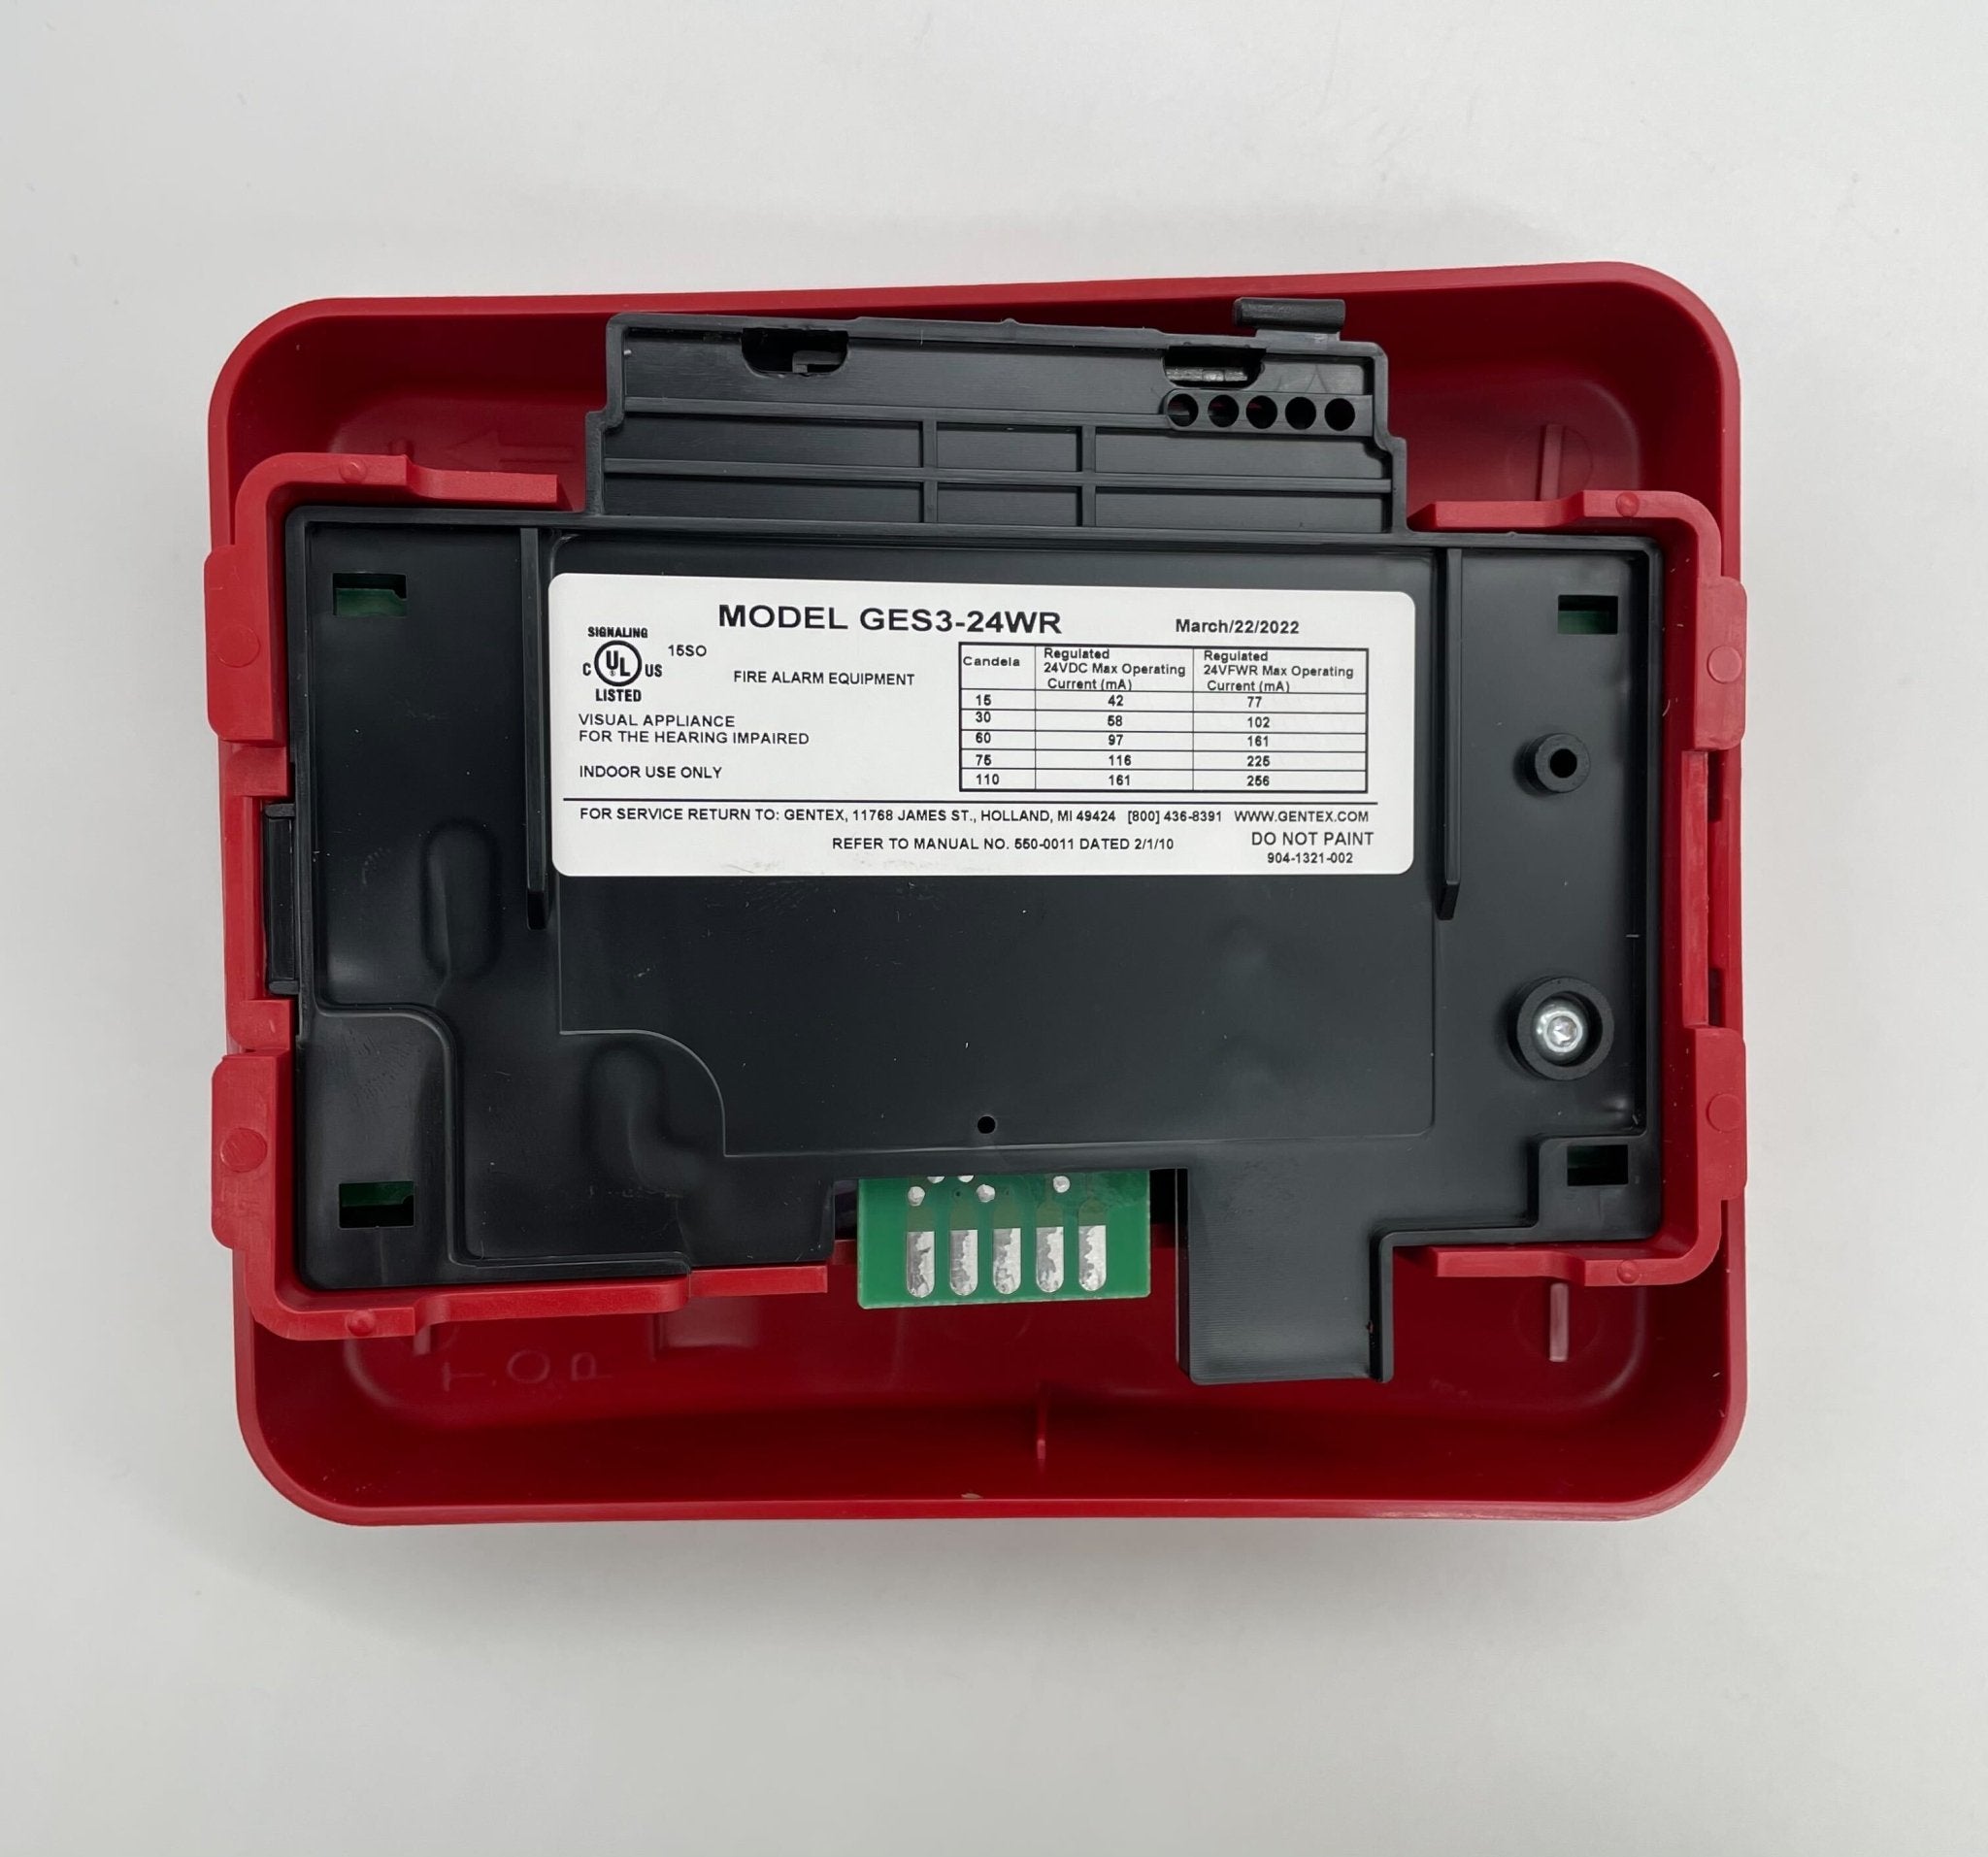 Gentex GES3-24WR - The Fire Alarm Supplier